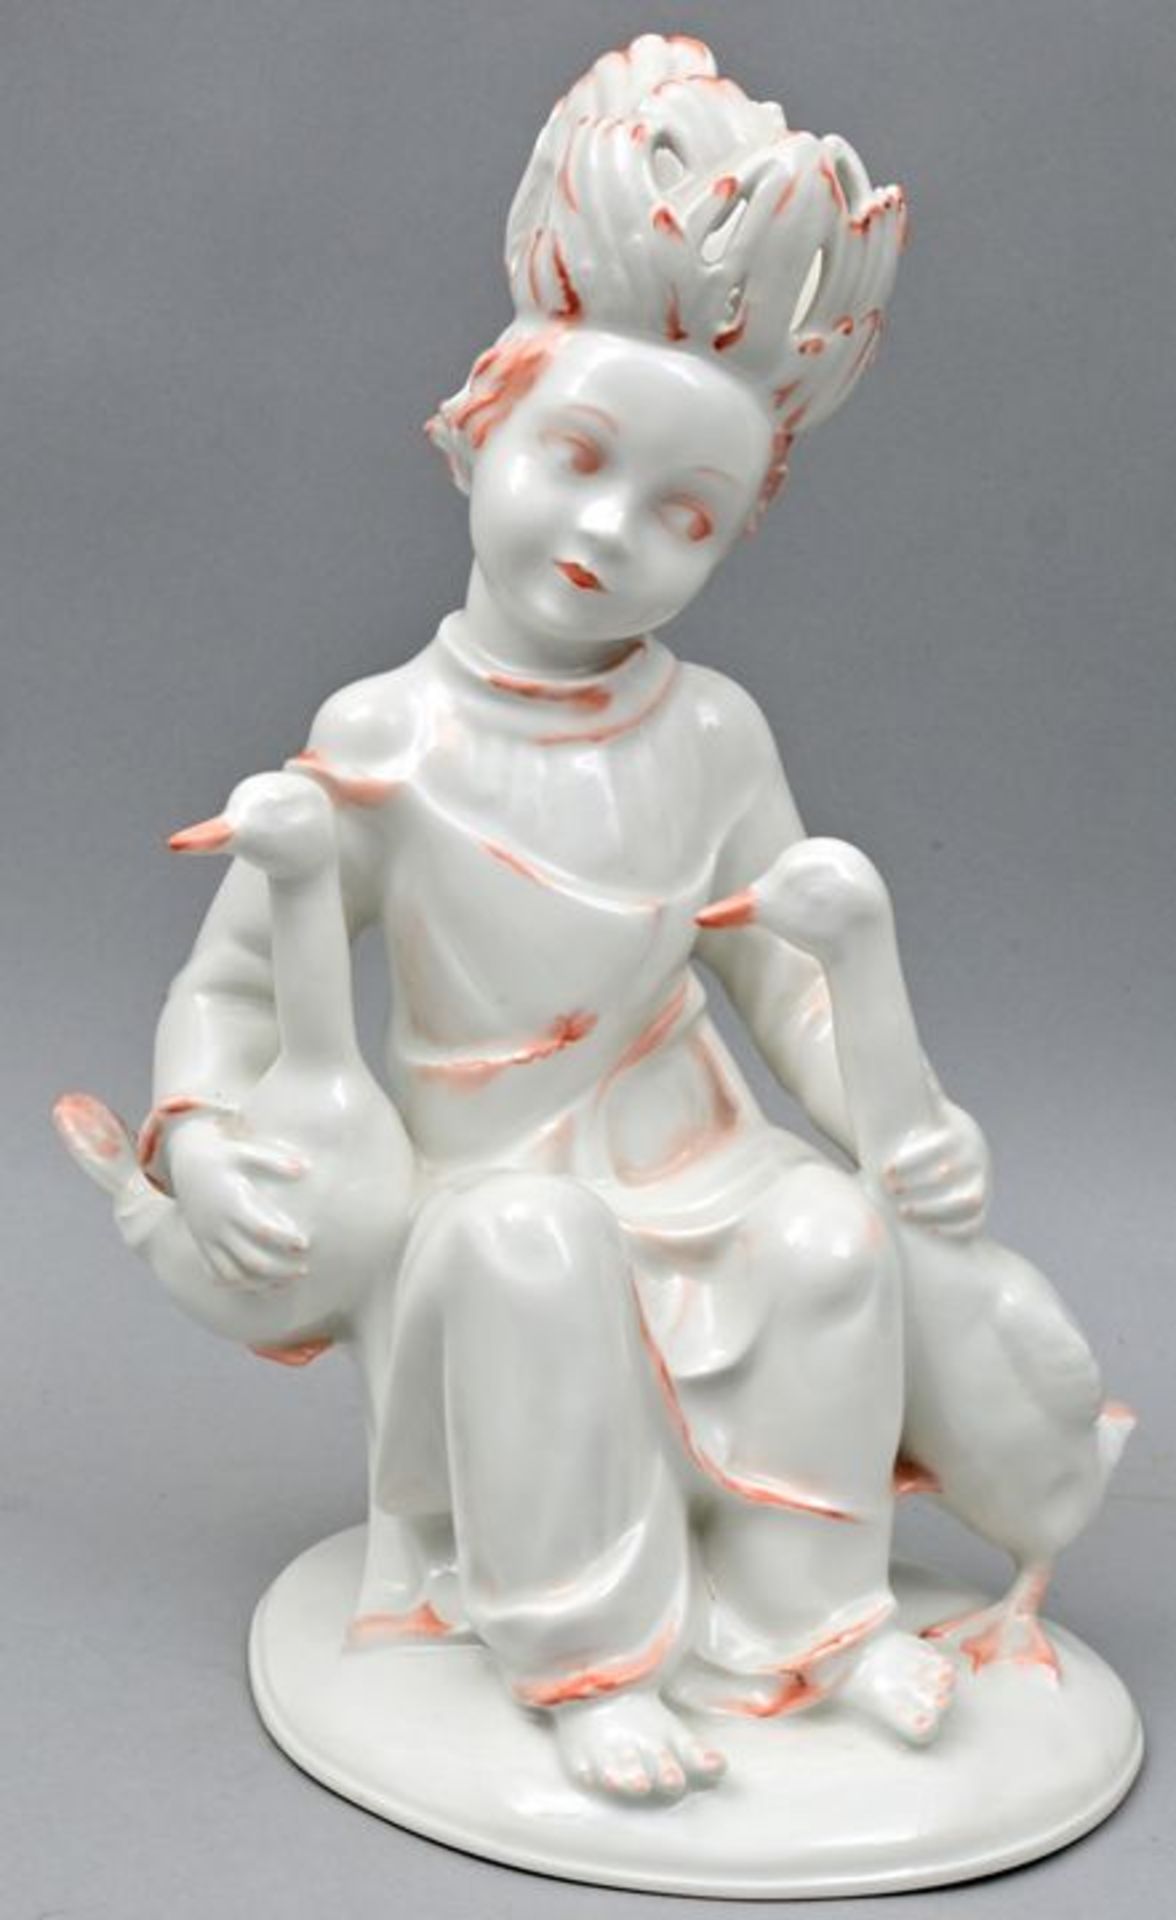 Porzellanfigur Gänsekönig/ porcelain figure